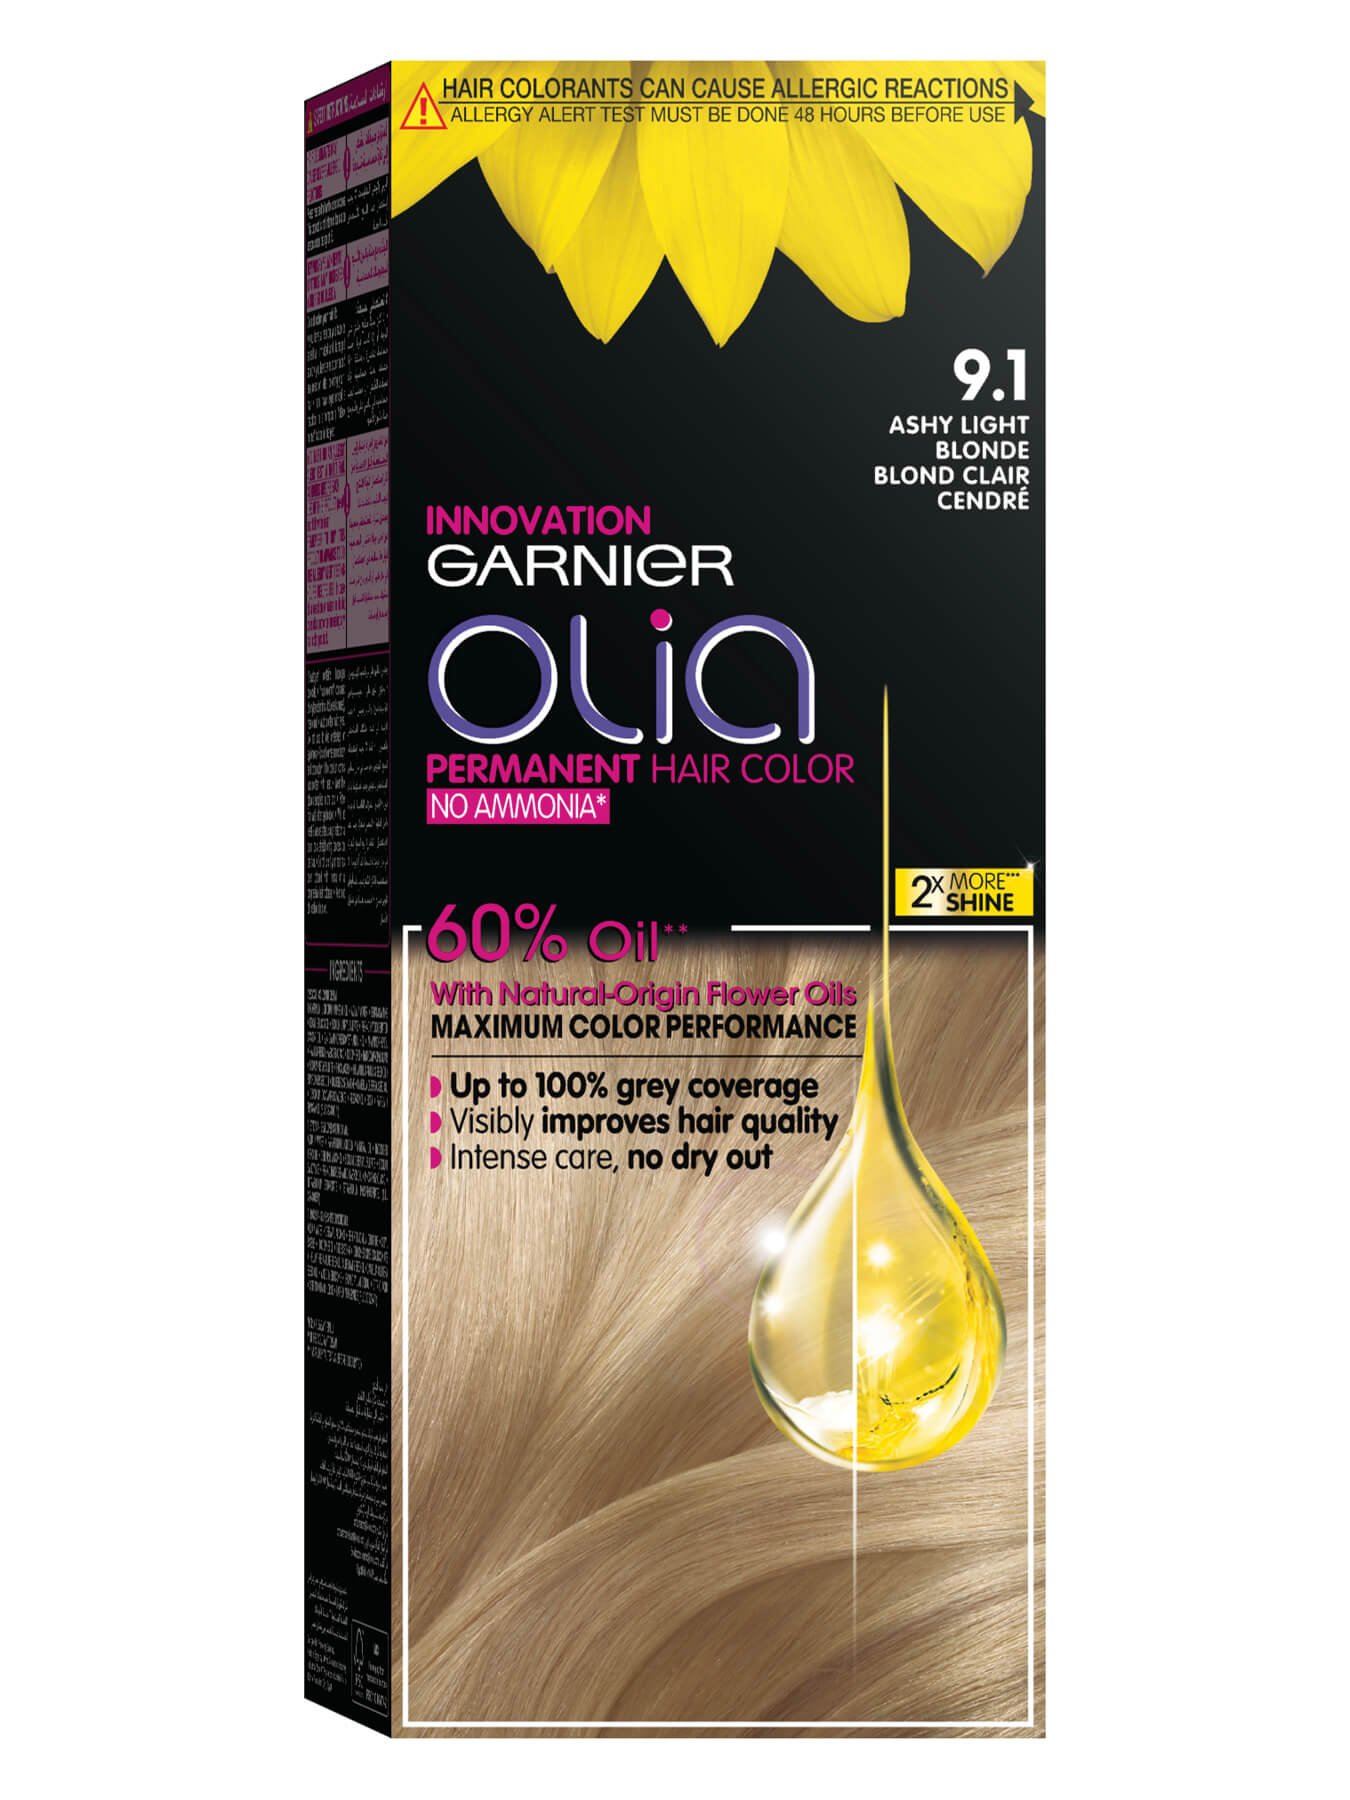 Garnier Olia, 9.1 Ashy Light Blonde, No Ammonia Permanent